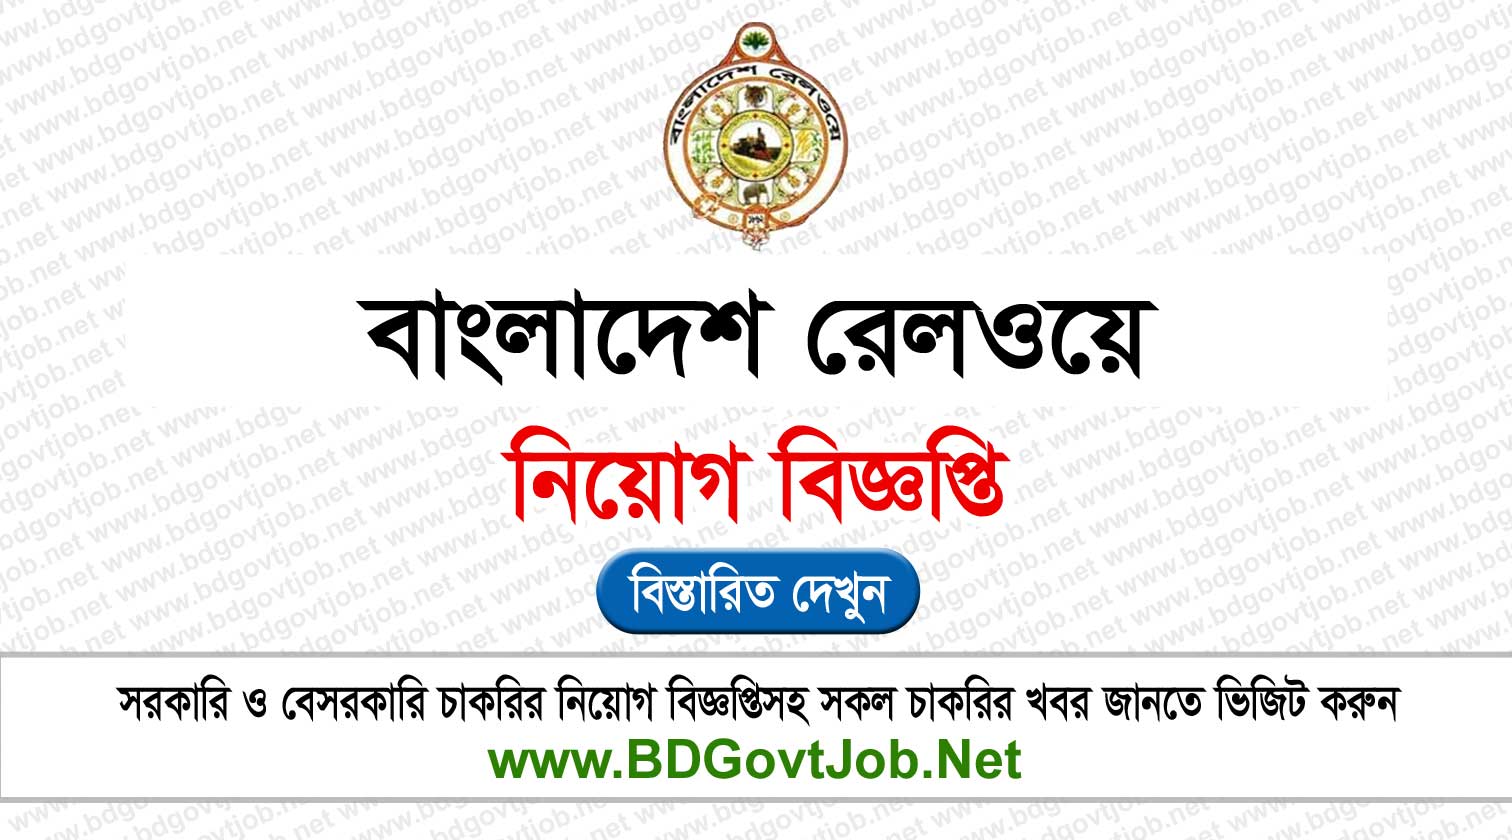 Bangladesh Railway job circular